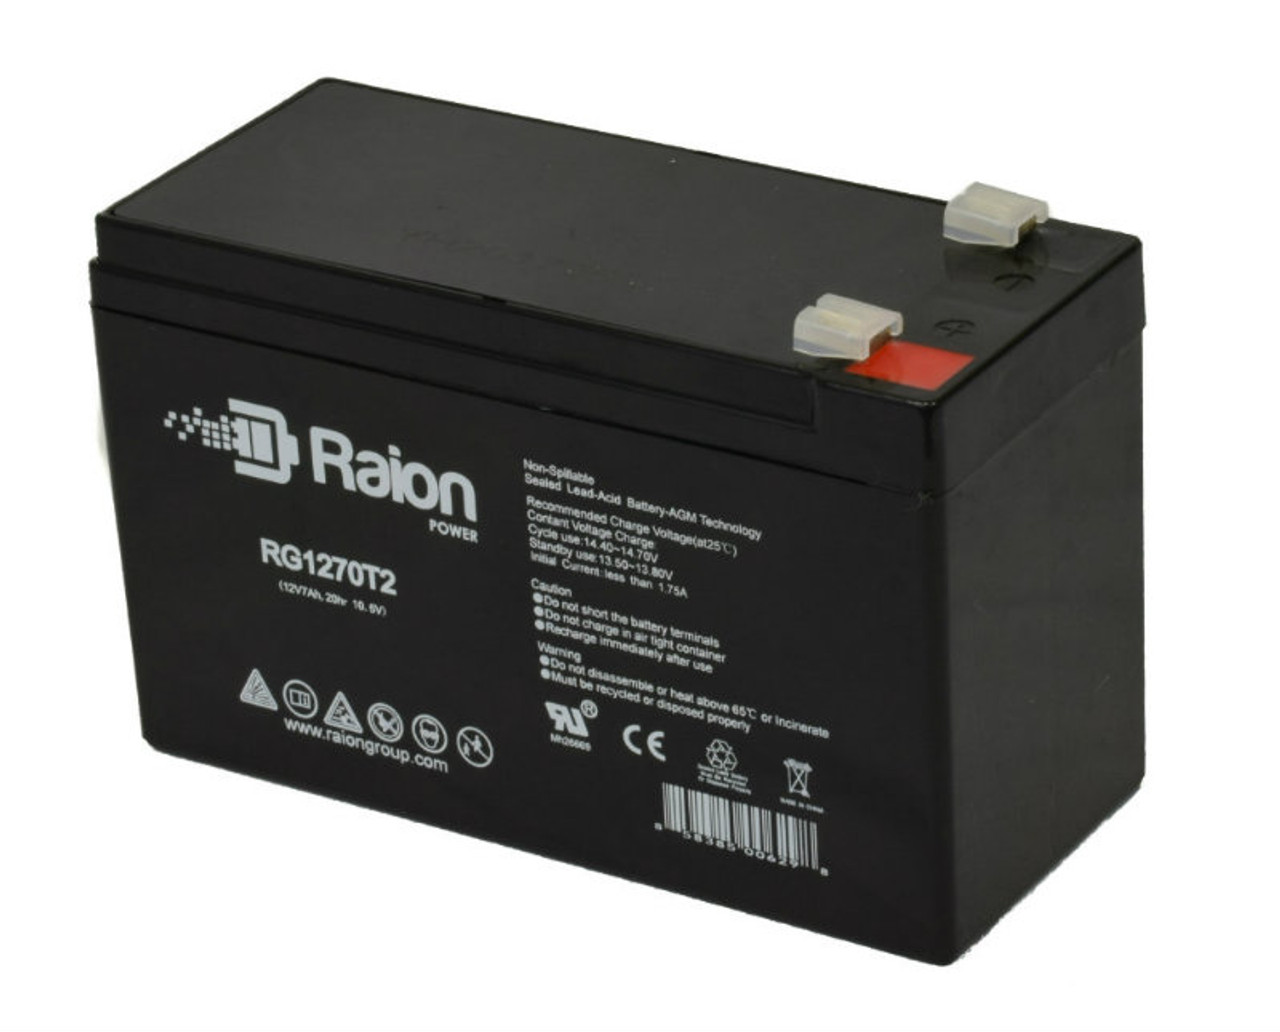 Raion Power RG1270T2 12V 7Ah Rechargeable Battery for Acorn 130 Straight Stairlift